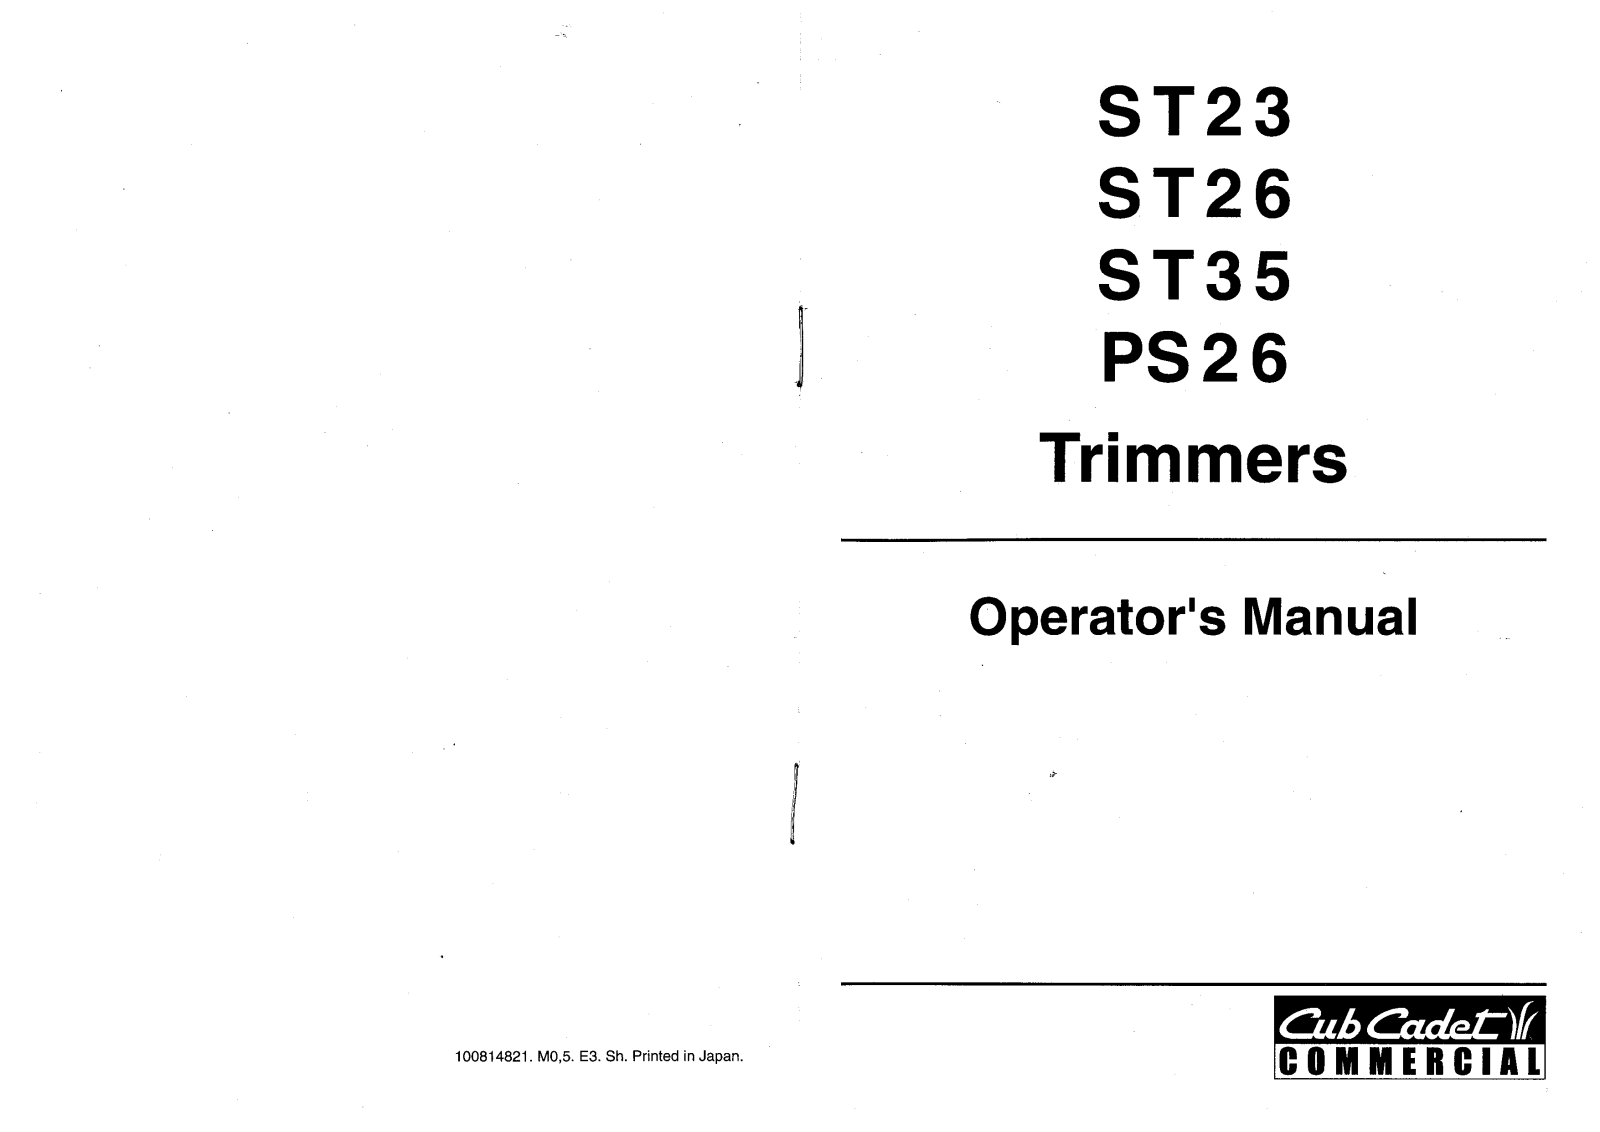 Mtd st23, st26, st35, ps26 operators manual